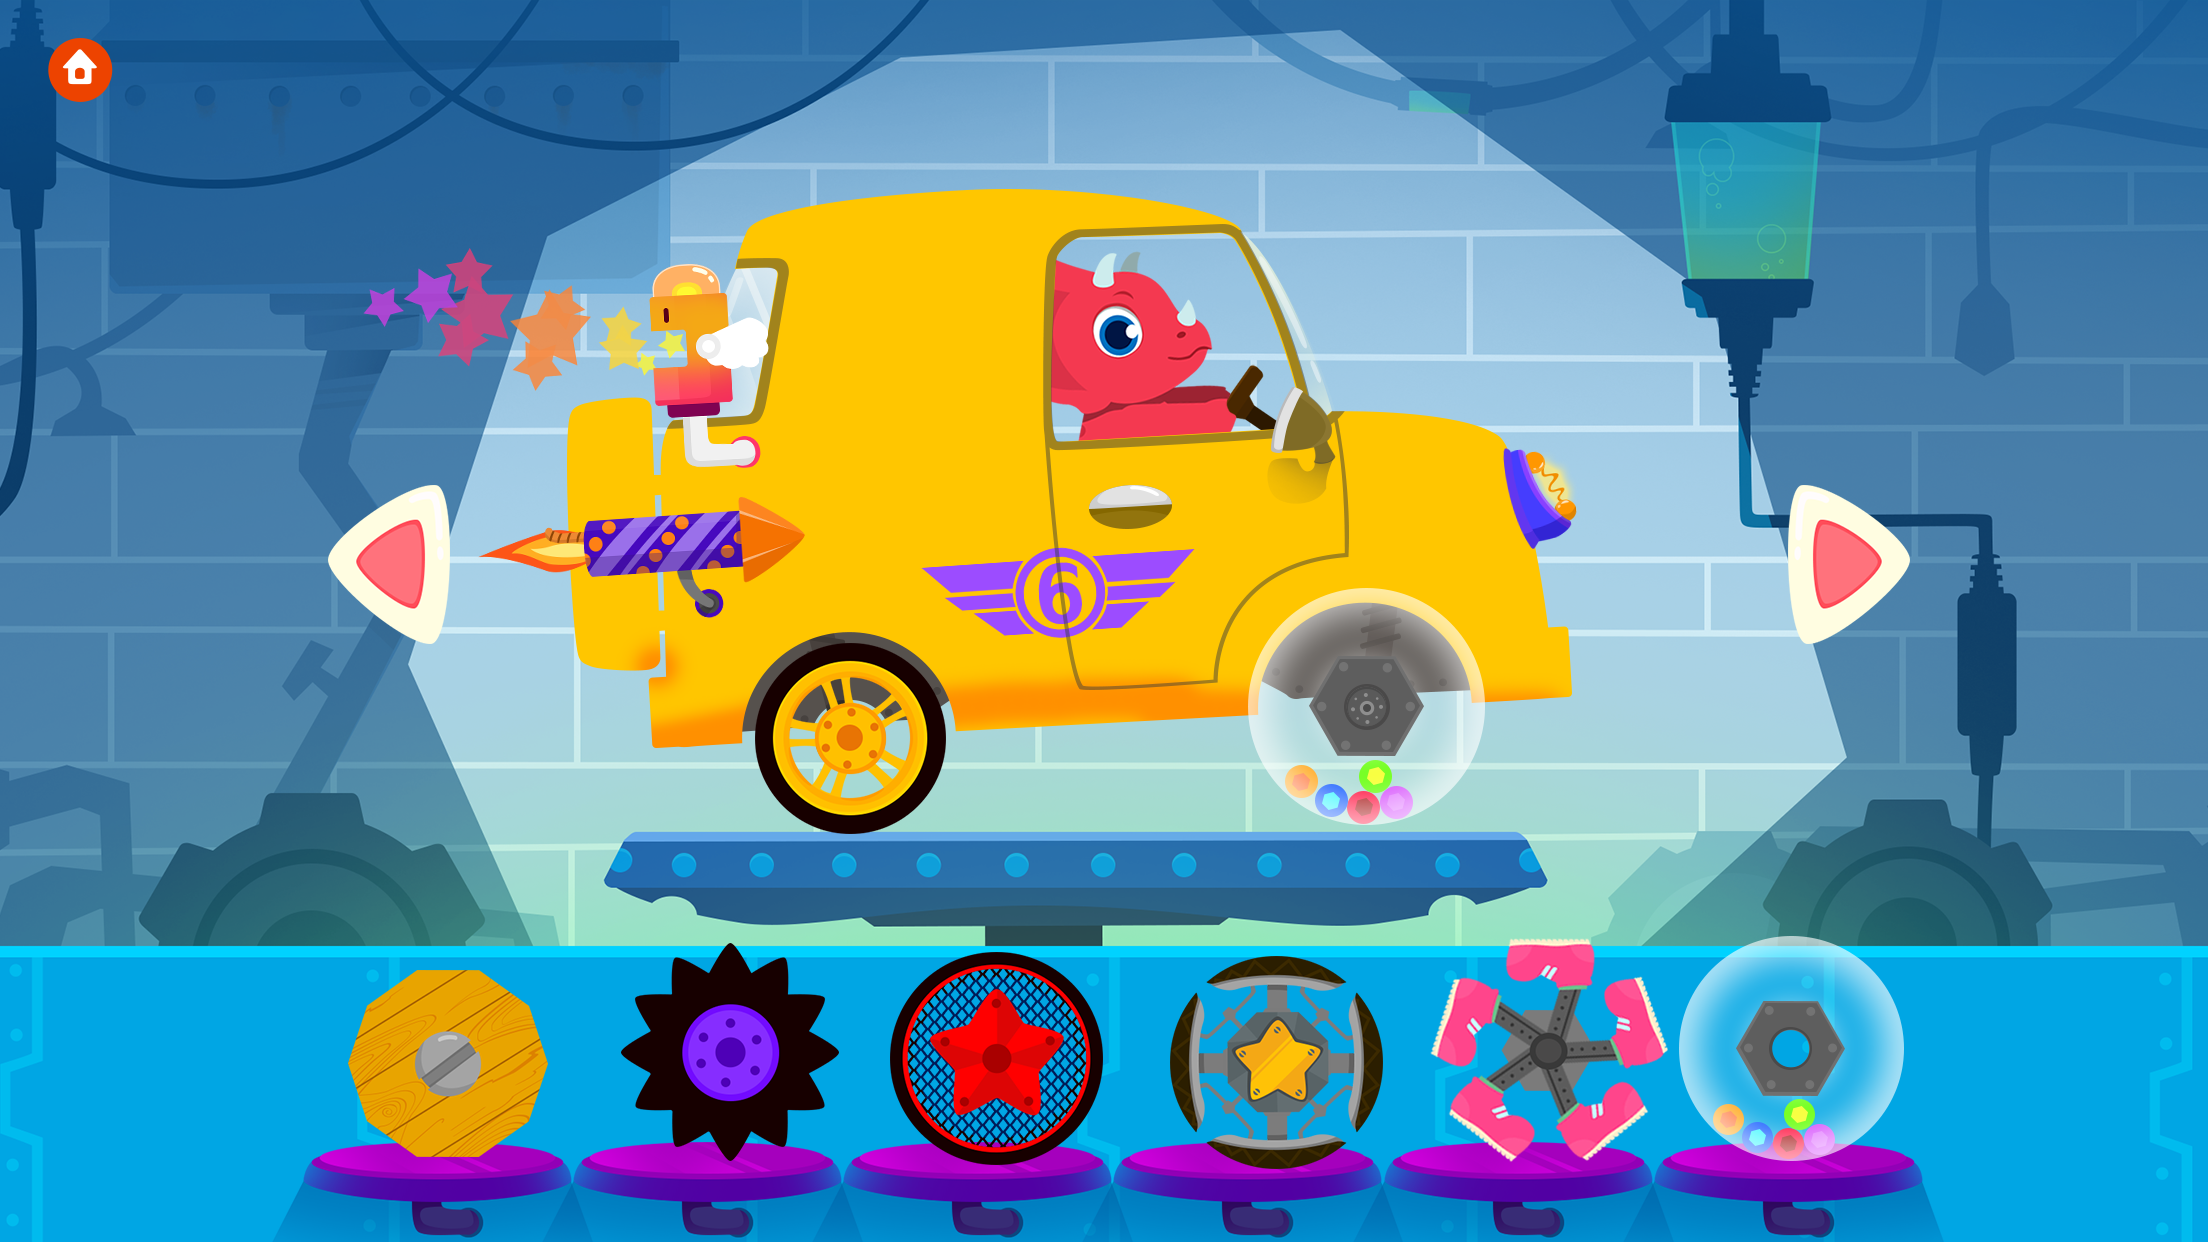 Dinosaur Car - Games for kids